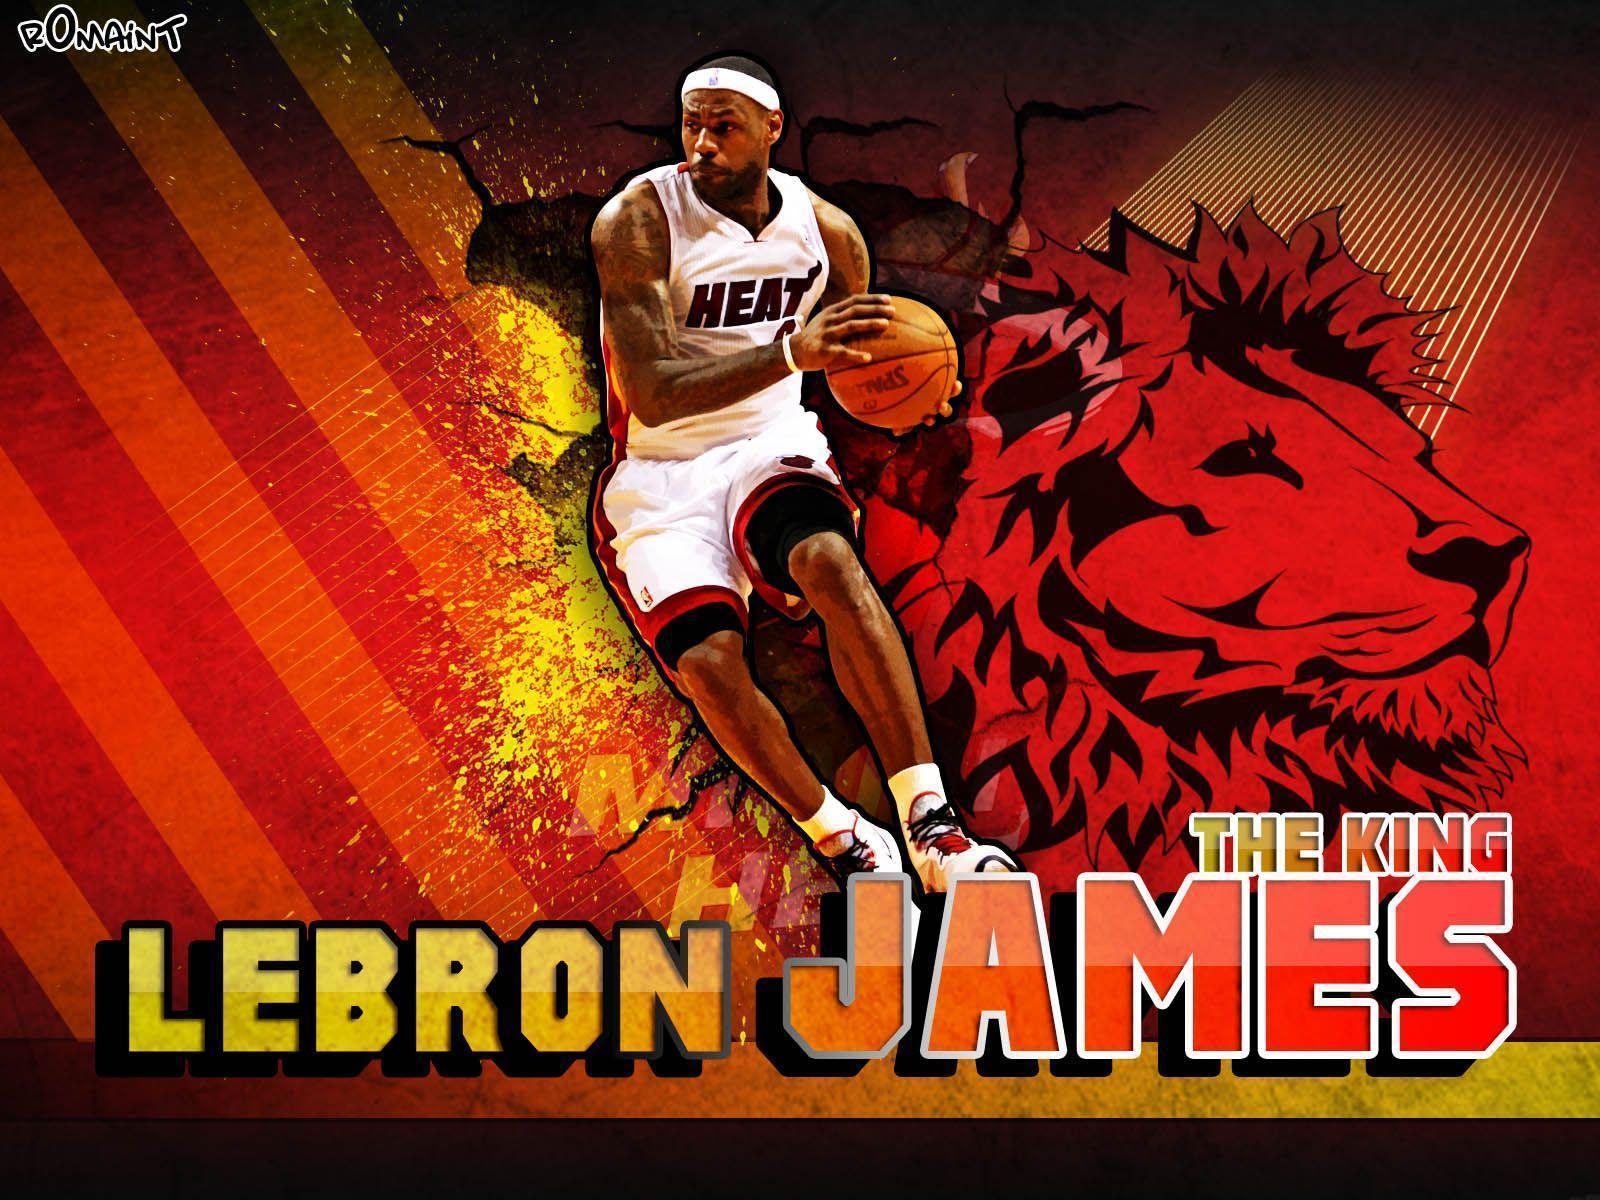 LeBron James Wallpaper Heat, Full HD 1080p, Best HD LeBron James